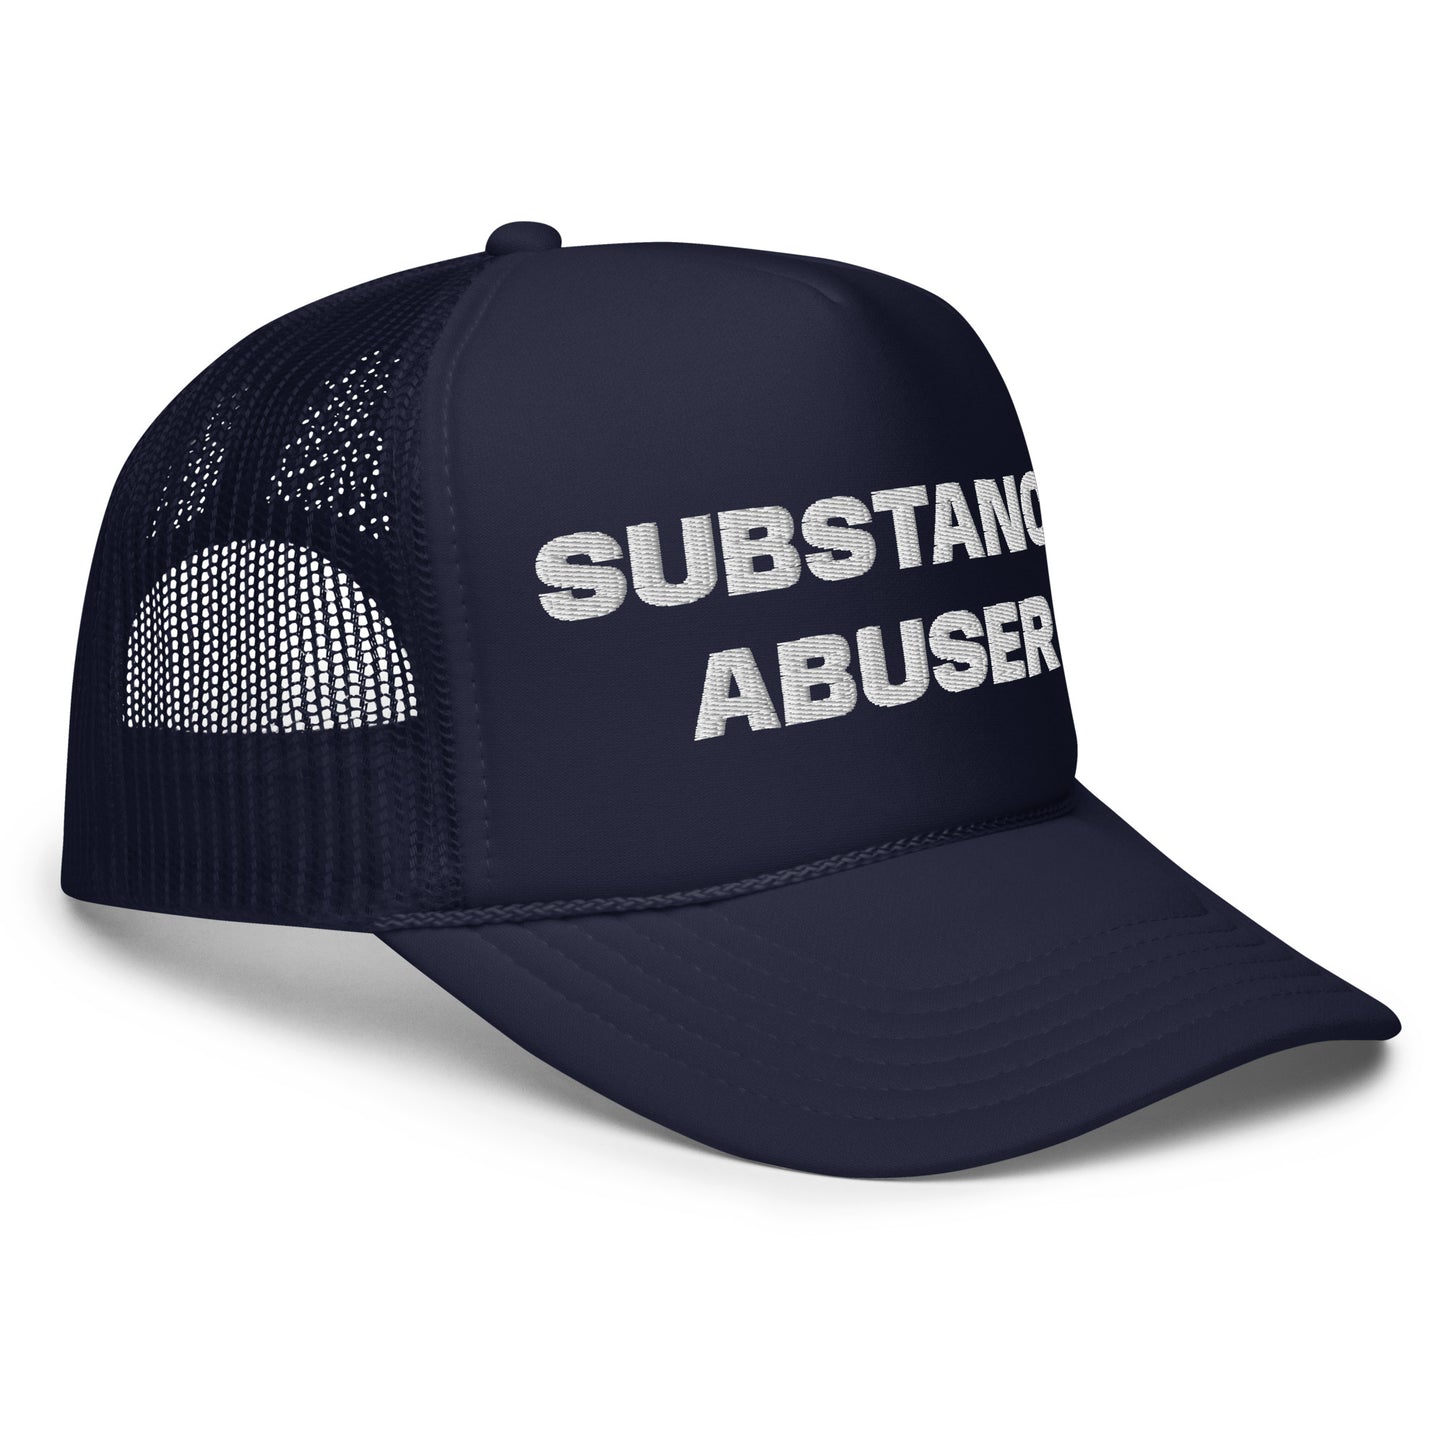 Substance Abuser Foam Trucker Hat